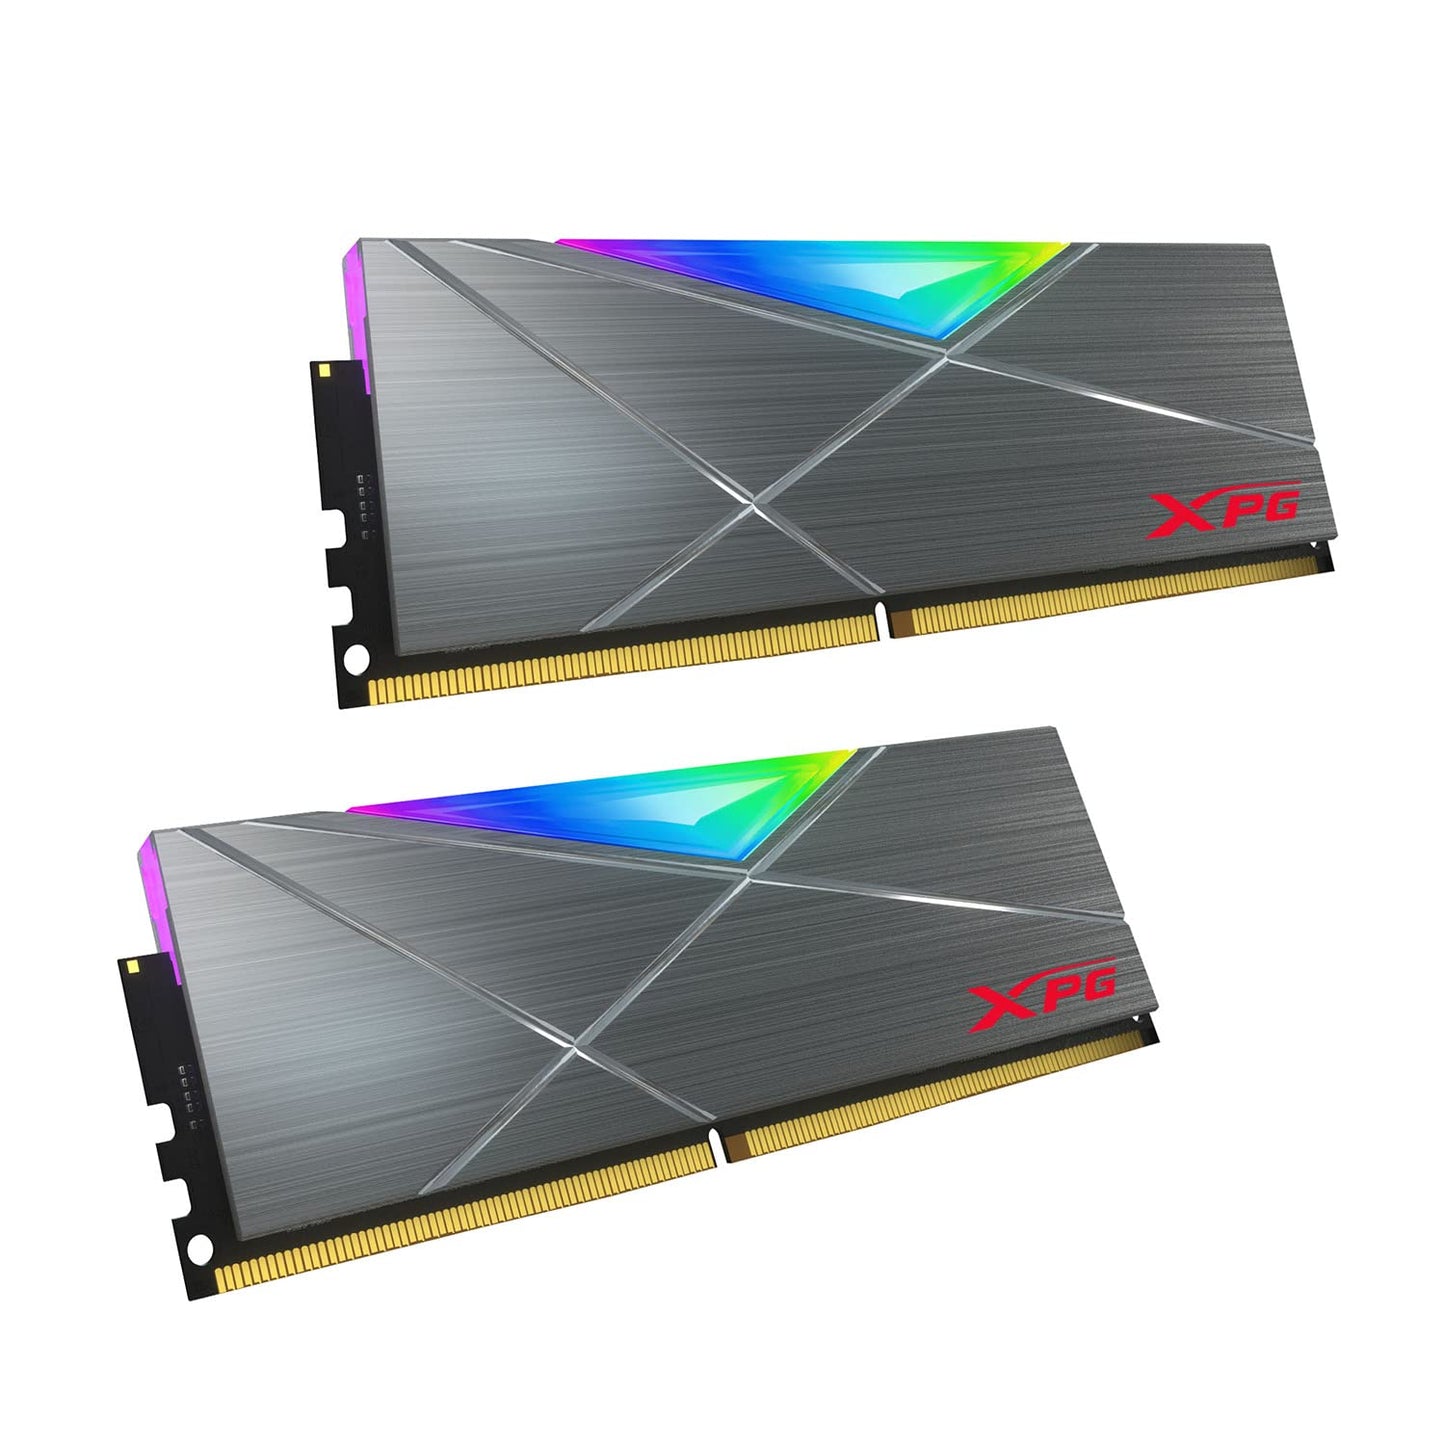 XPG Spectrix D50 16GB (1*16 GB) DDR4 3200 MHz CL 19-19-19 at 1.2V Desktop Memory RAM -AX4U320016G16A-ST50